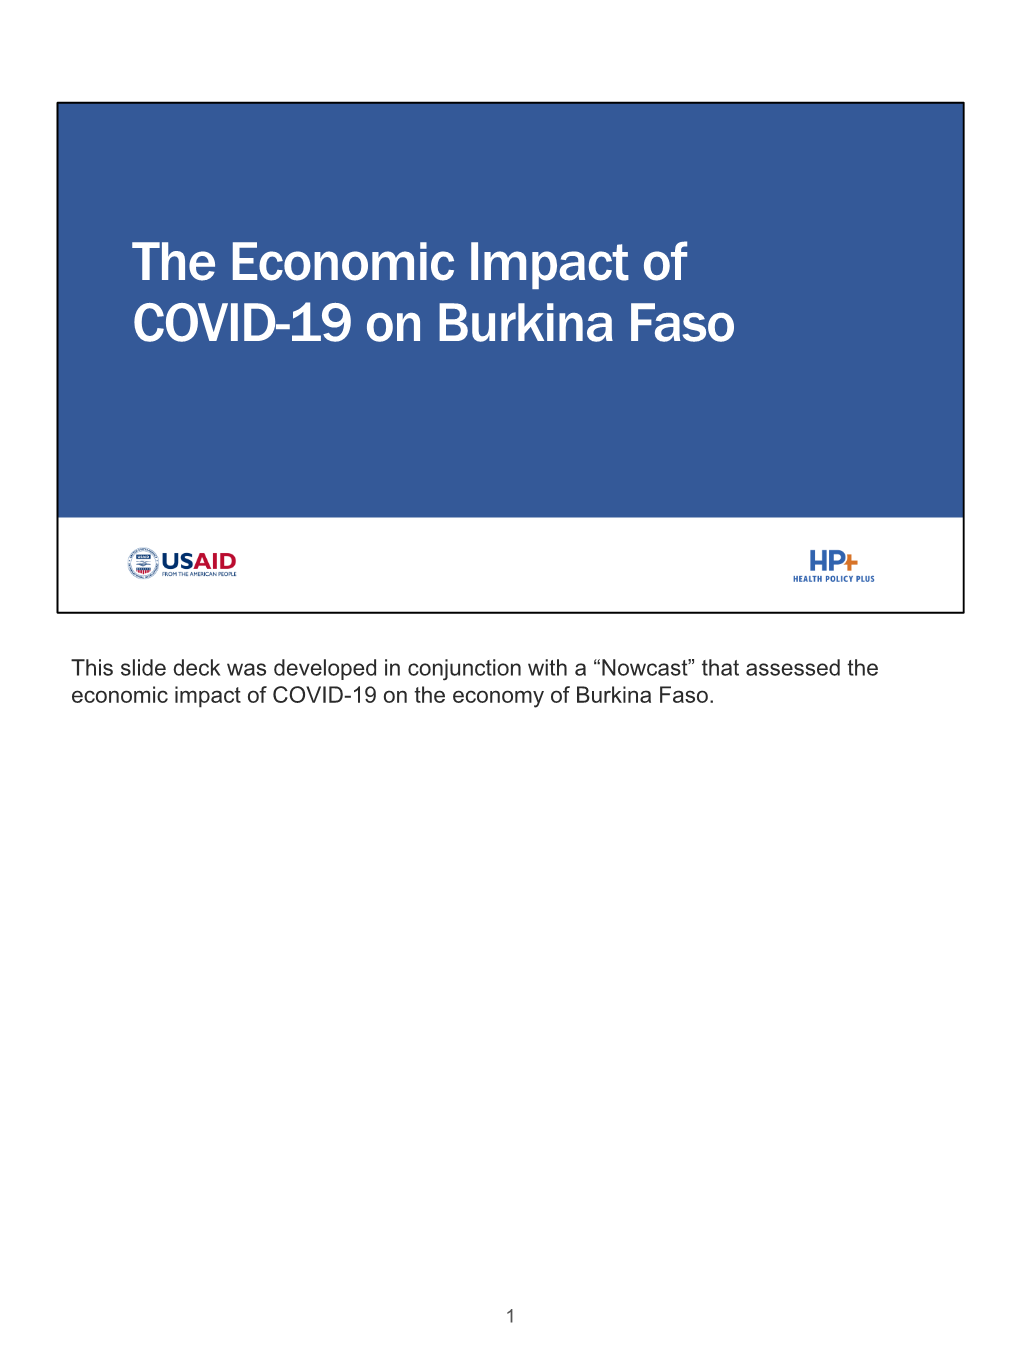 The Economic Impact of COVID 19 on Burkina Faso